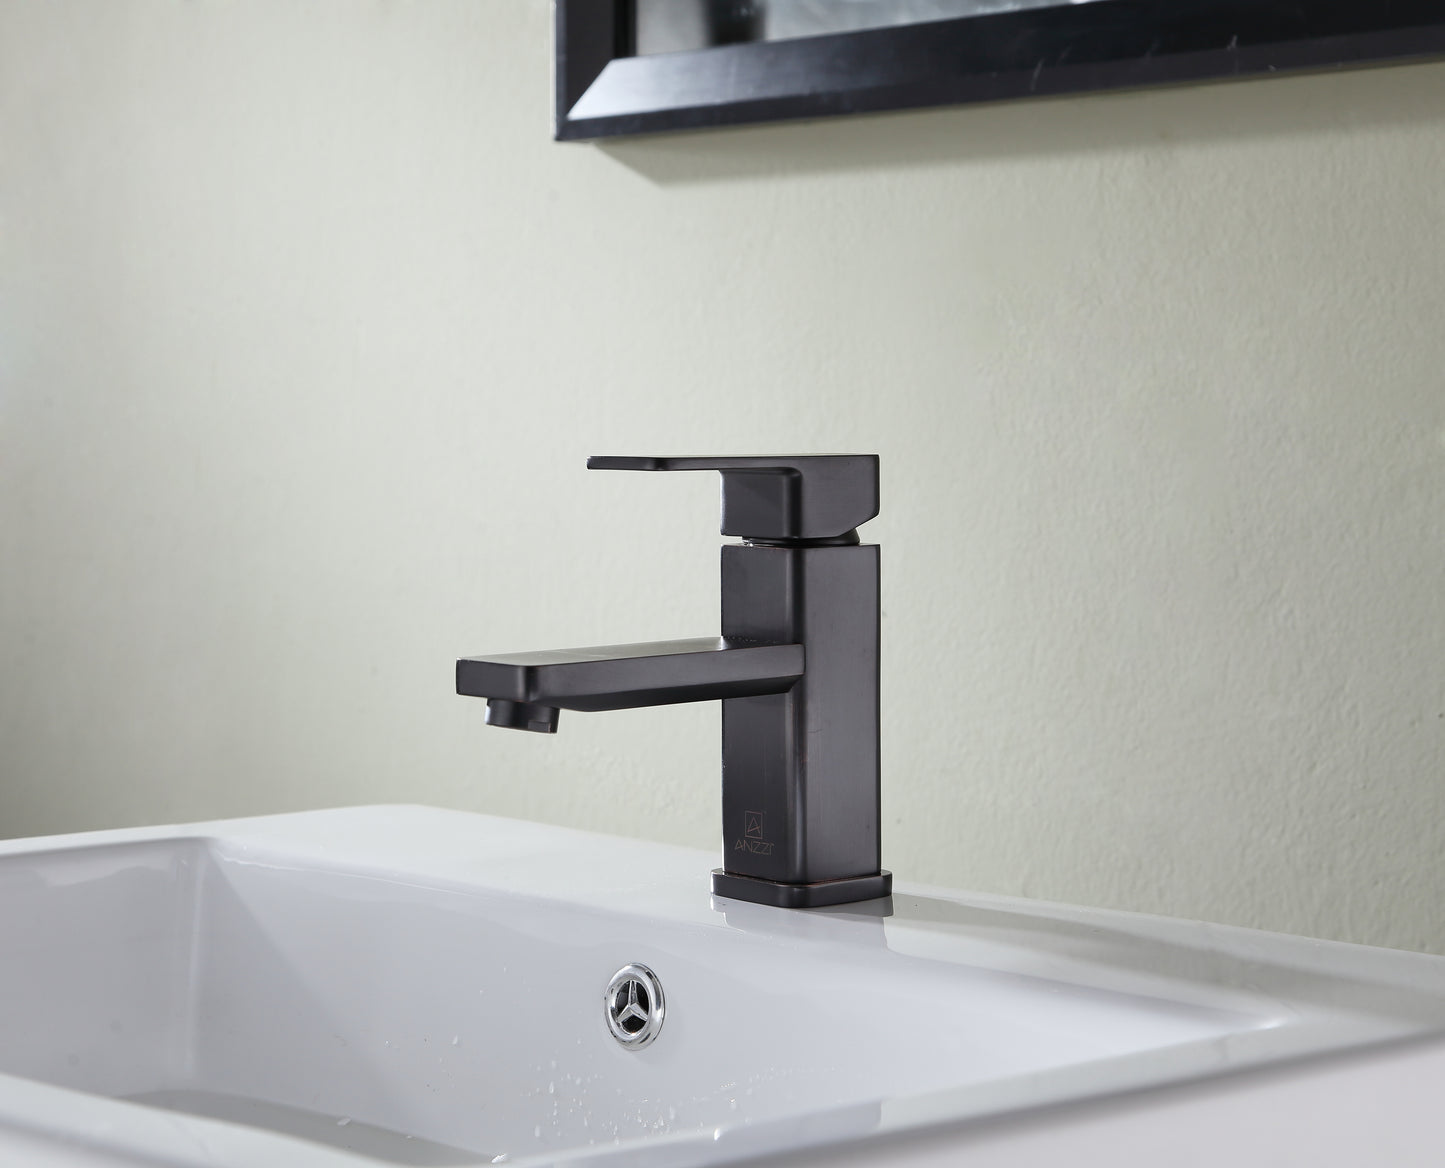 L-AZ122ORB - Naiadi Single Hole Single Handle Bathroom Faucet in Oil Rubbed Bronze